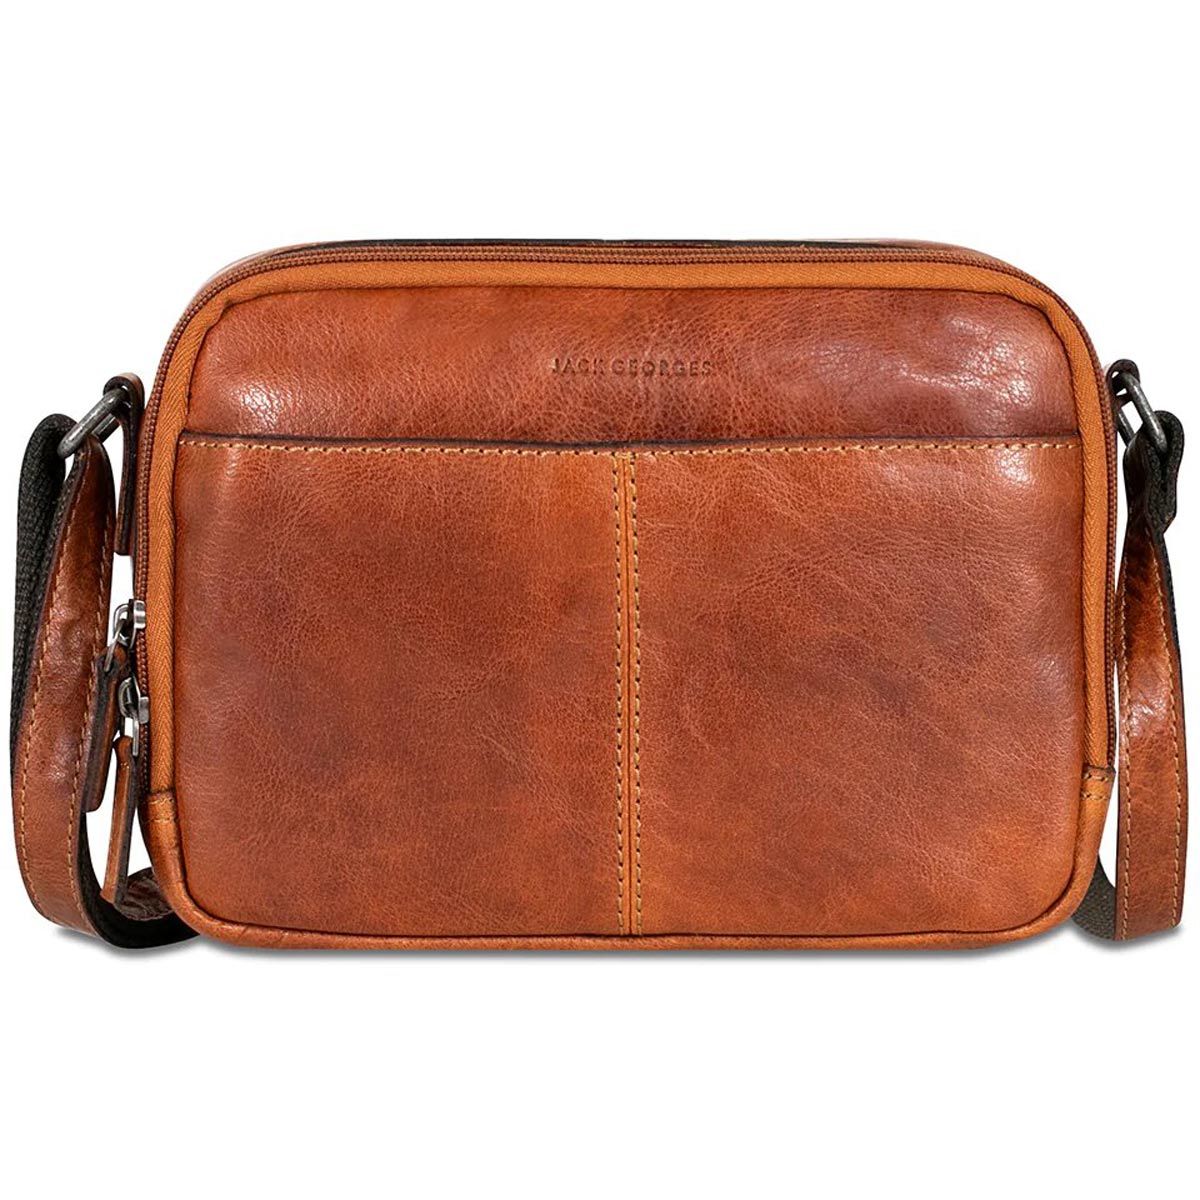 14 Medium Voyager Laptop Bag in Brown Leather